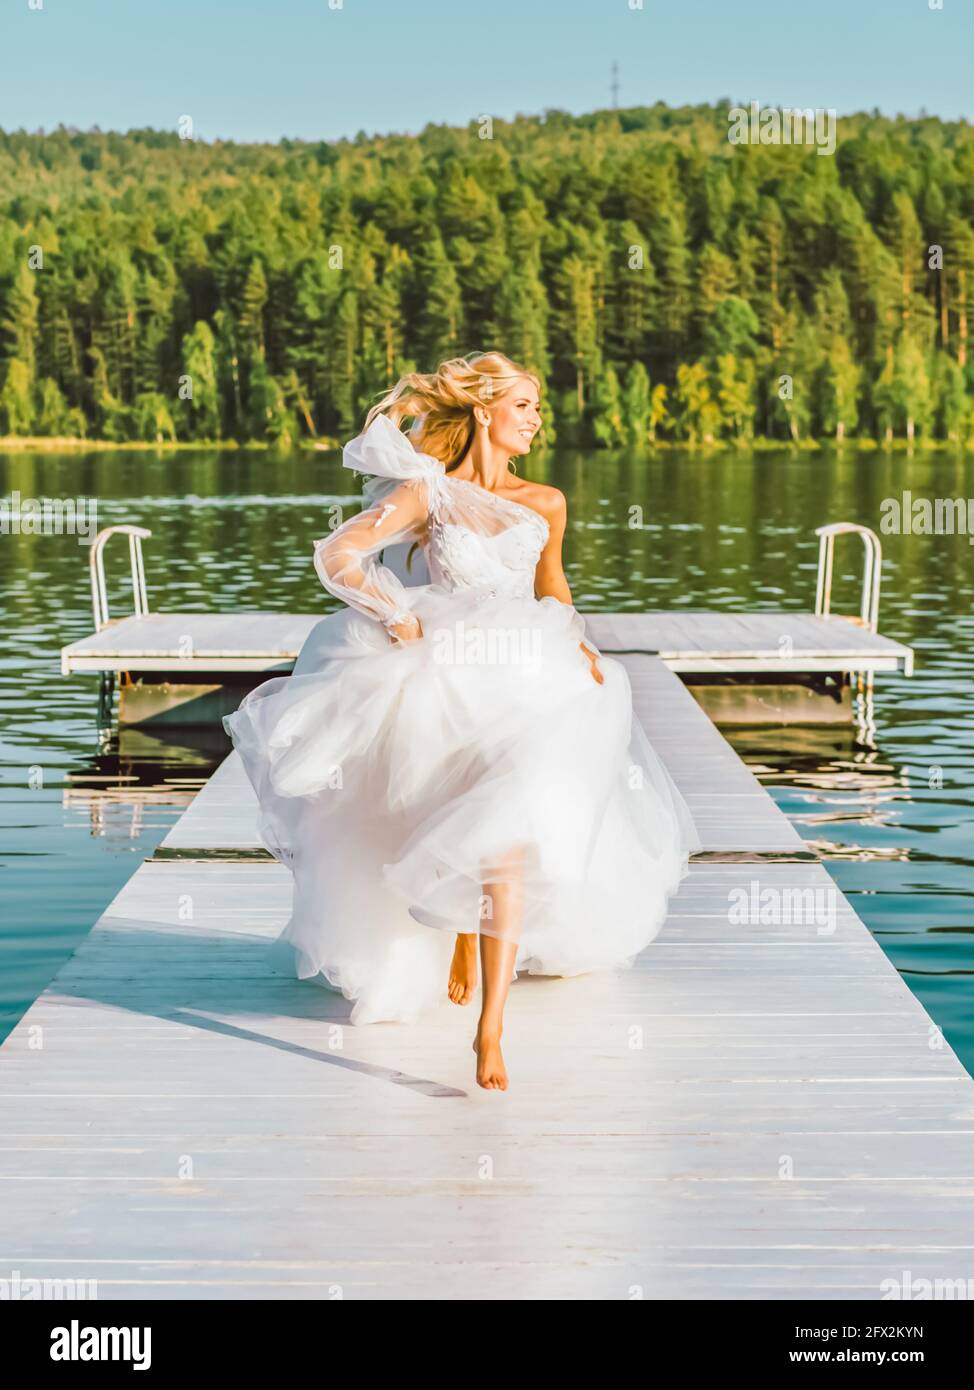 Bride runs barefoot towards happiness. Wedding concept Stock Photo